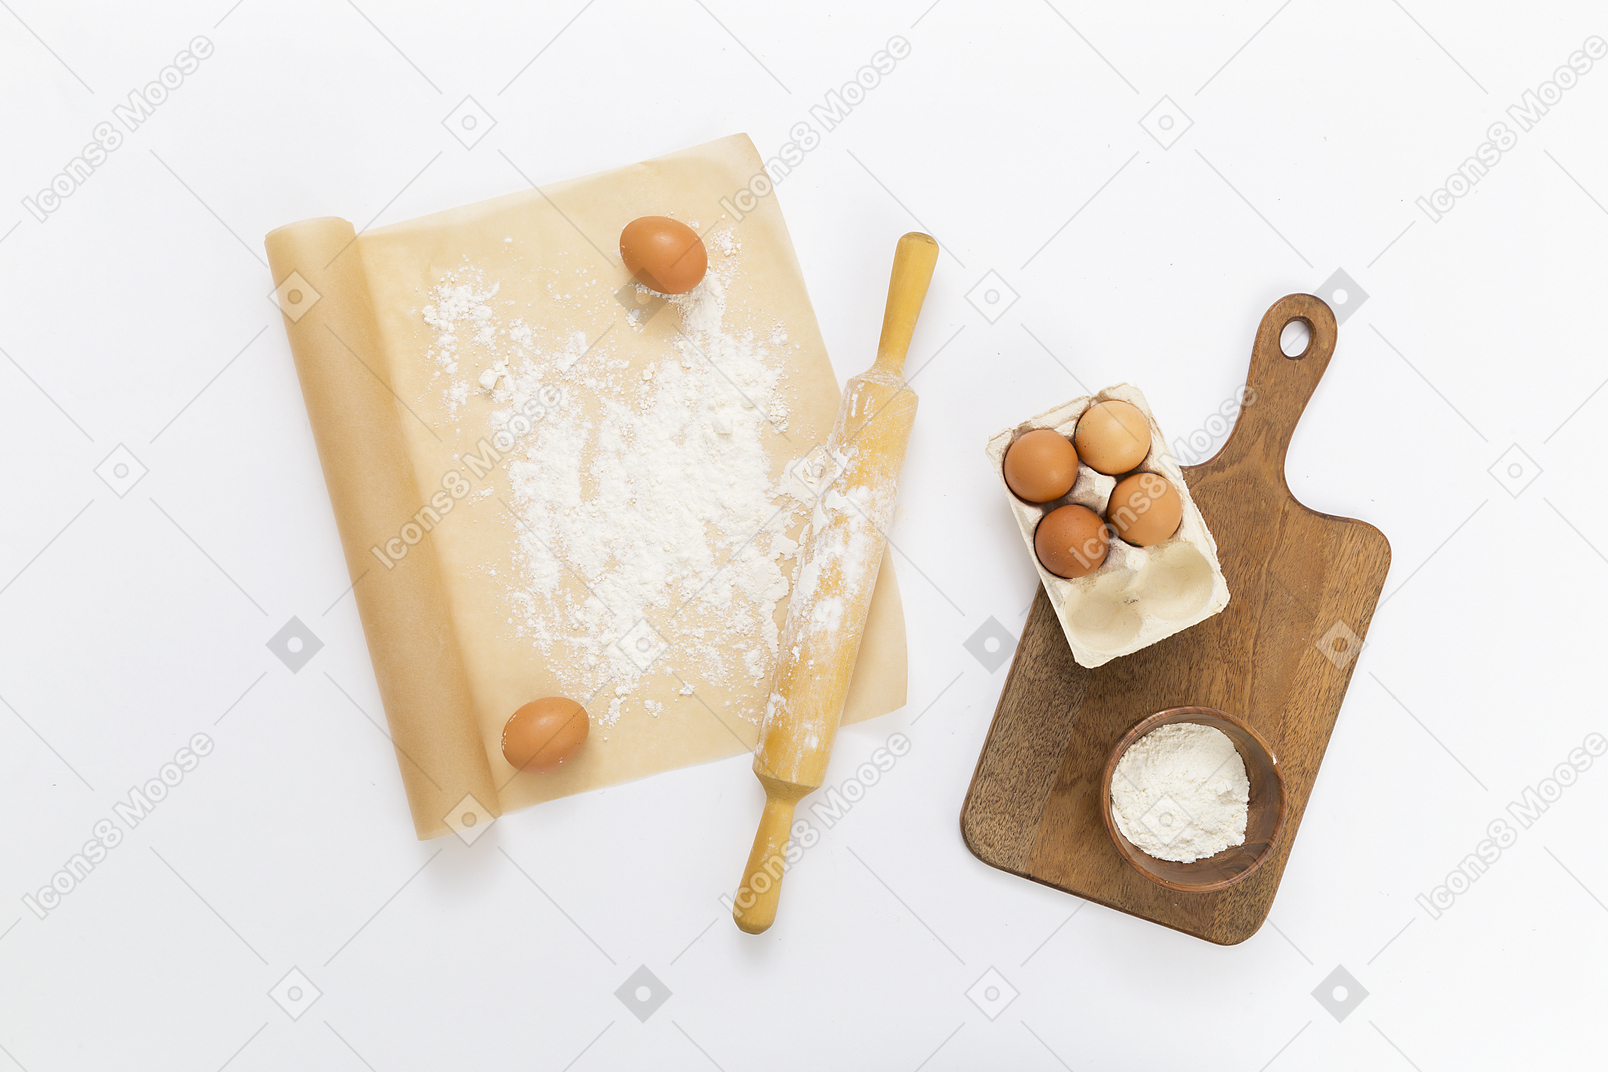 Papel manteiga, rolo, ovos e tábua de corte